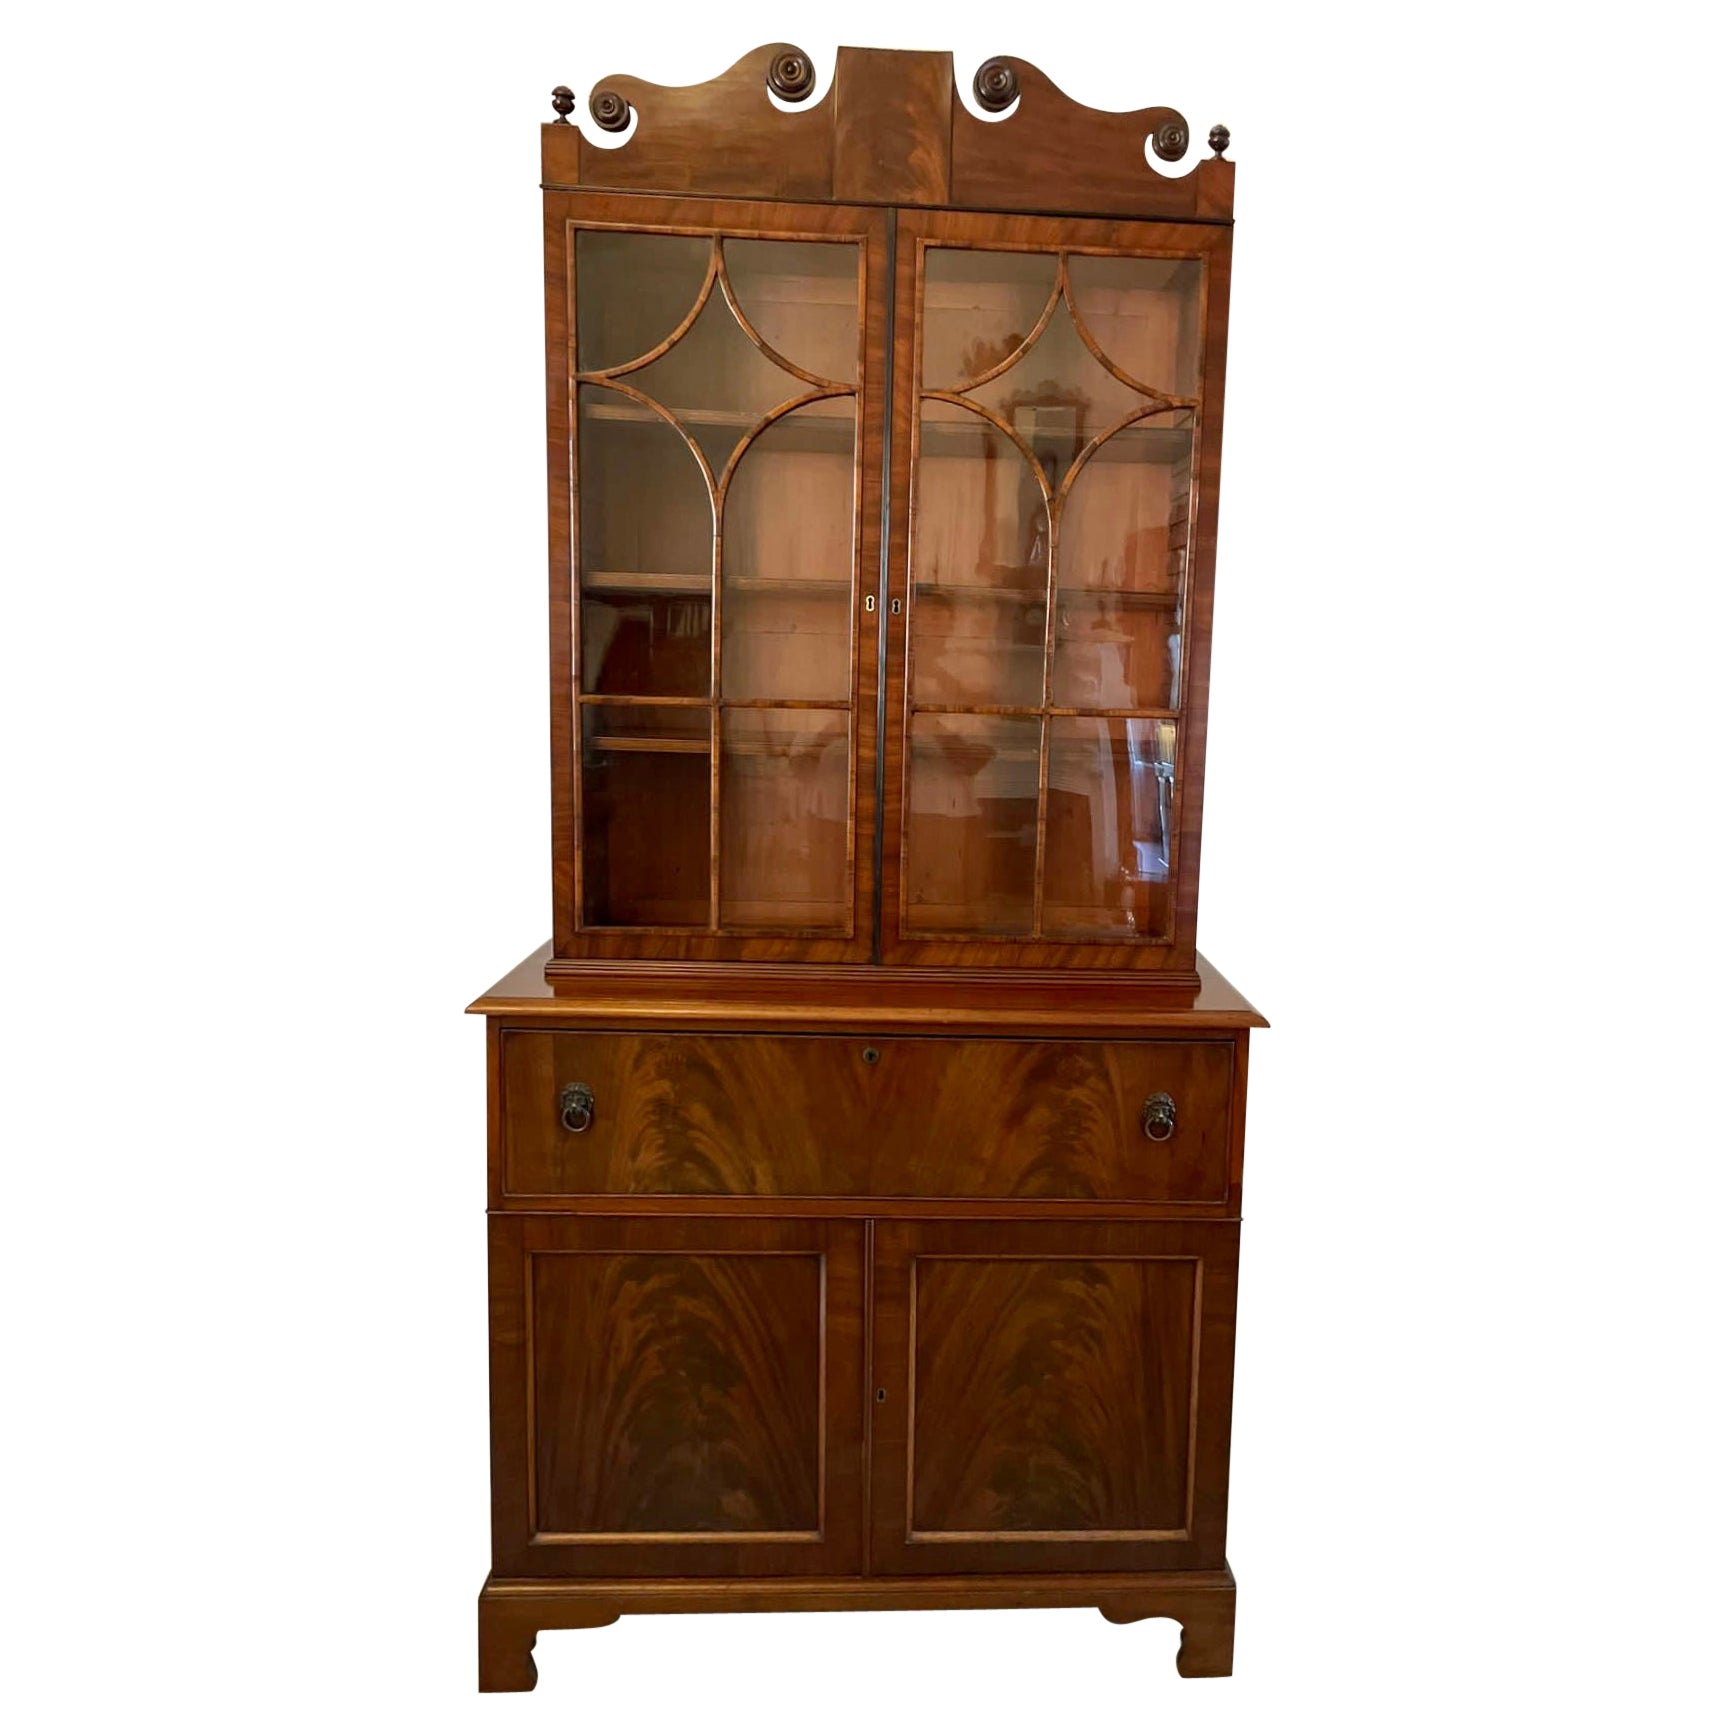 Outstanding Quality Antique Regency Mahogany Secretaire Bookcase 